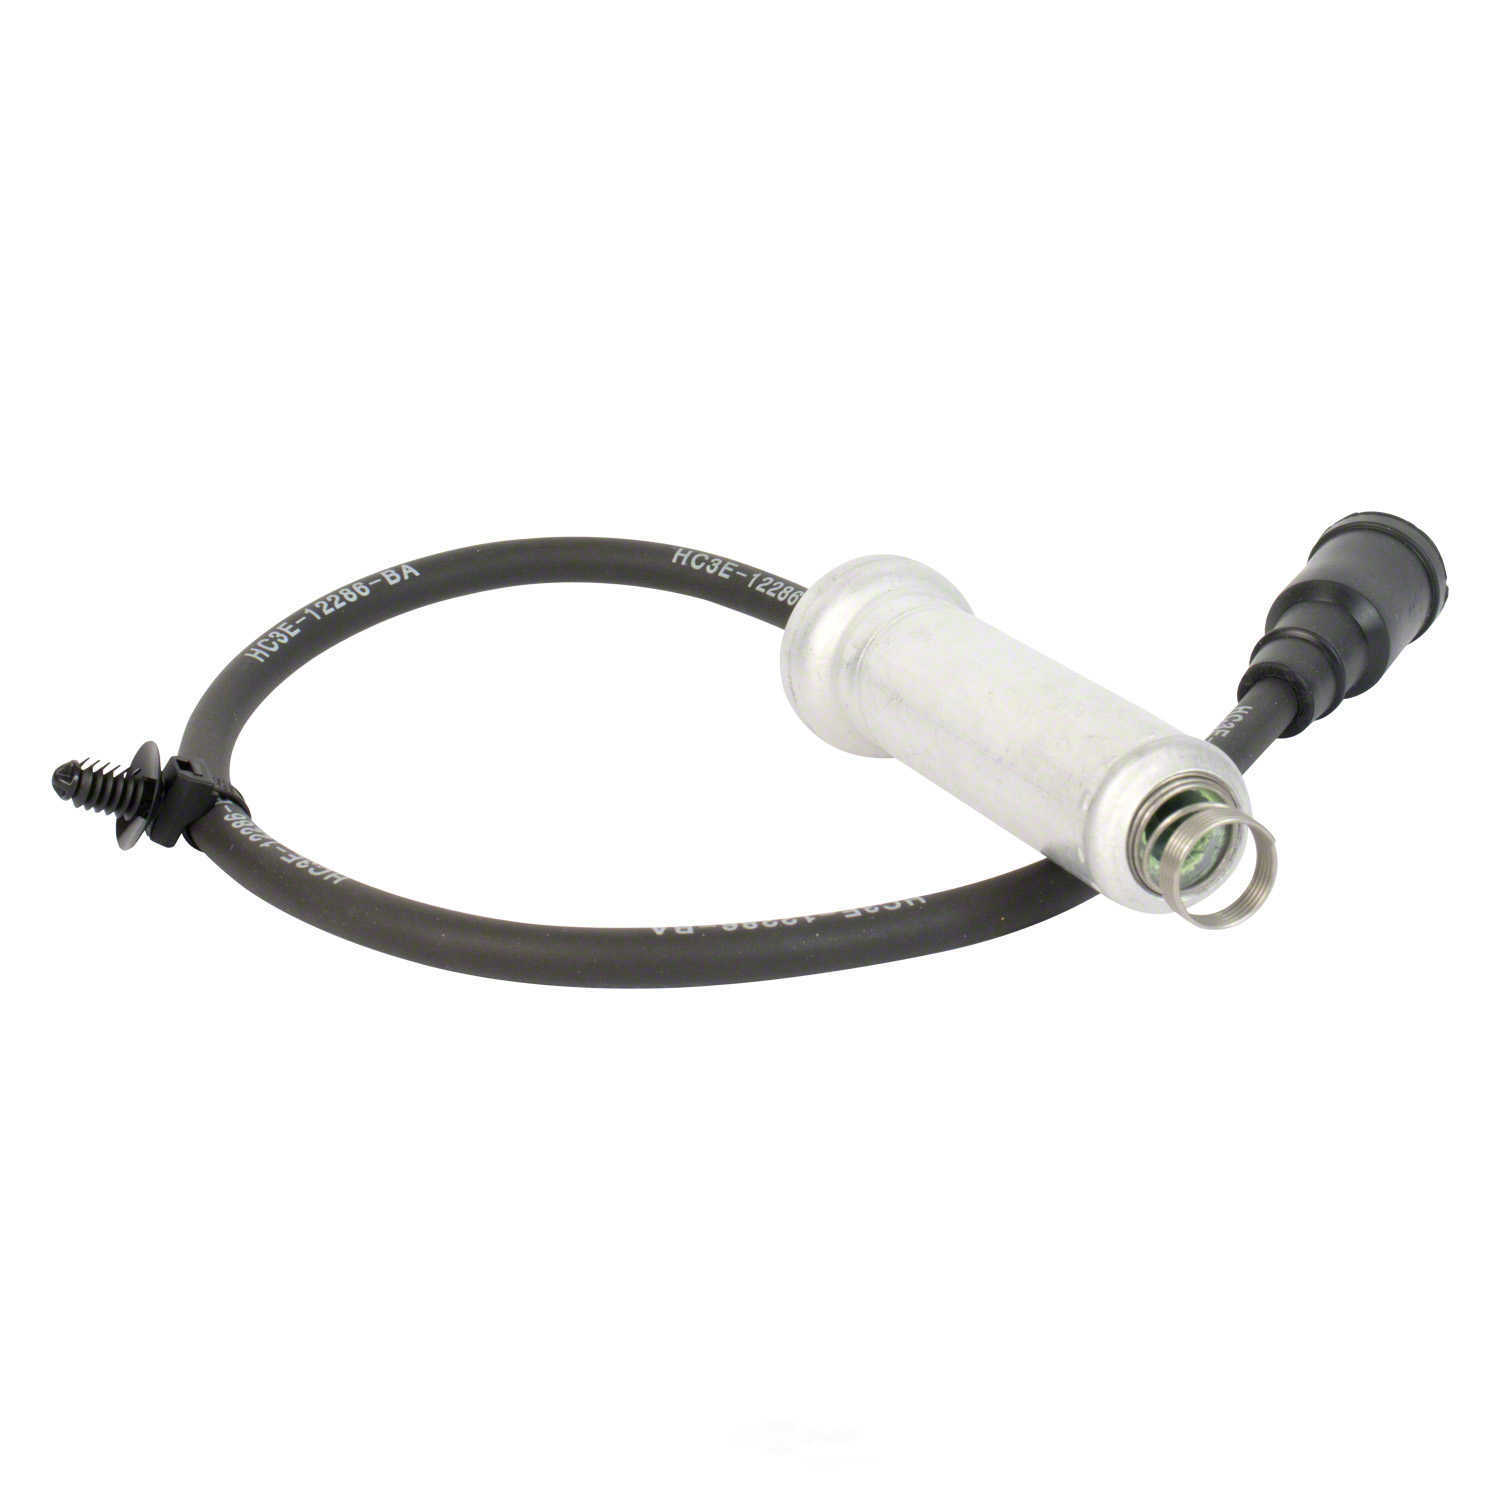 MOTORCRAFT - Single Lead Spark Plug Wire - MOT WR-6149